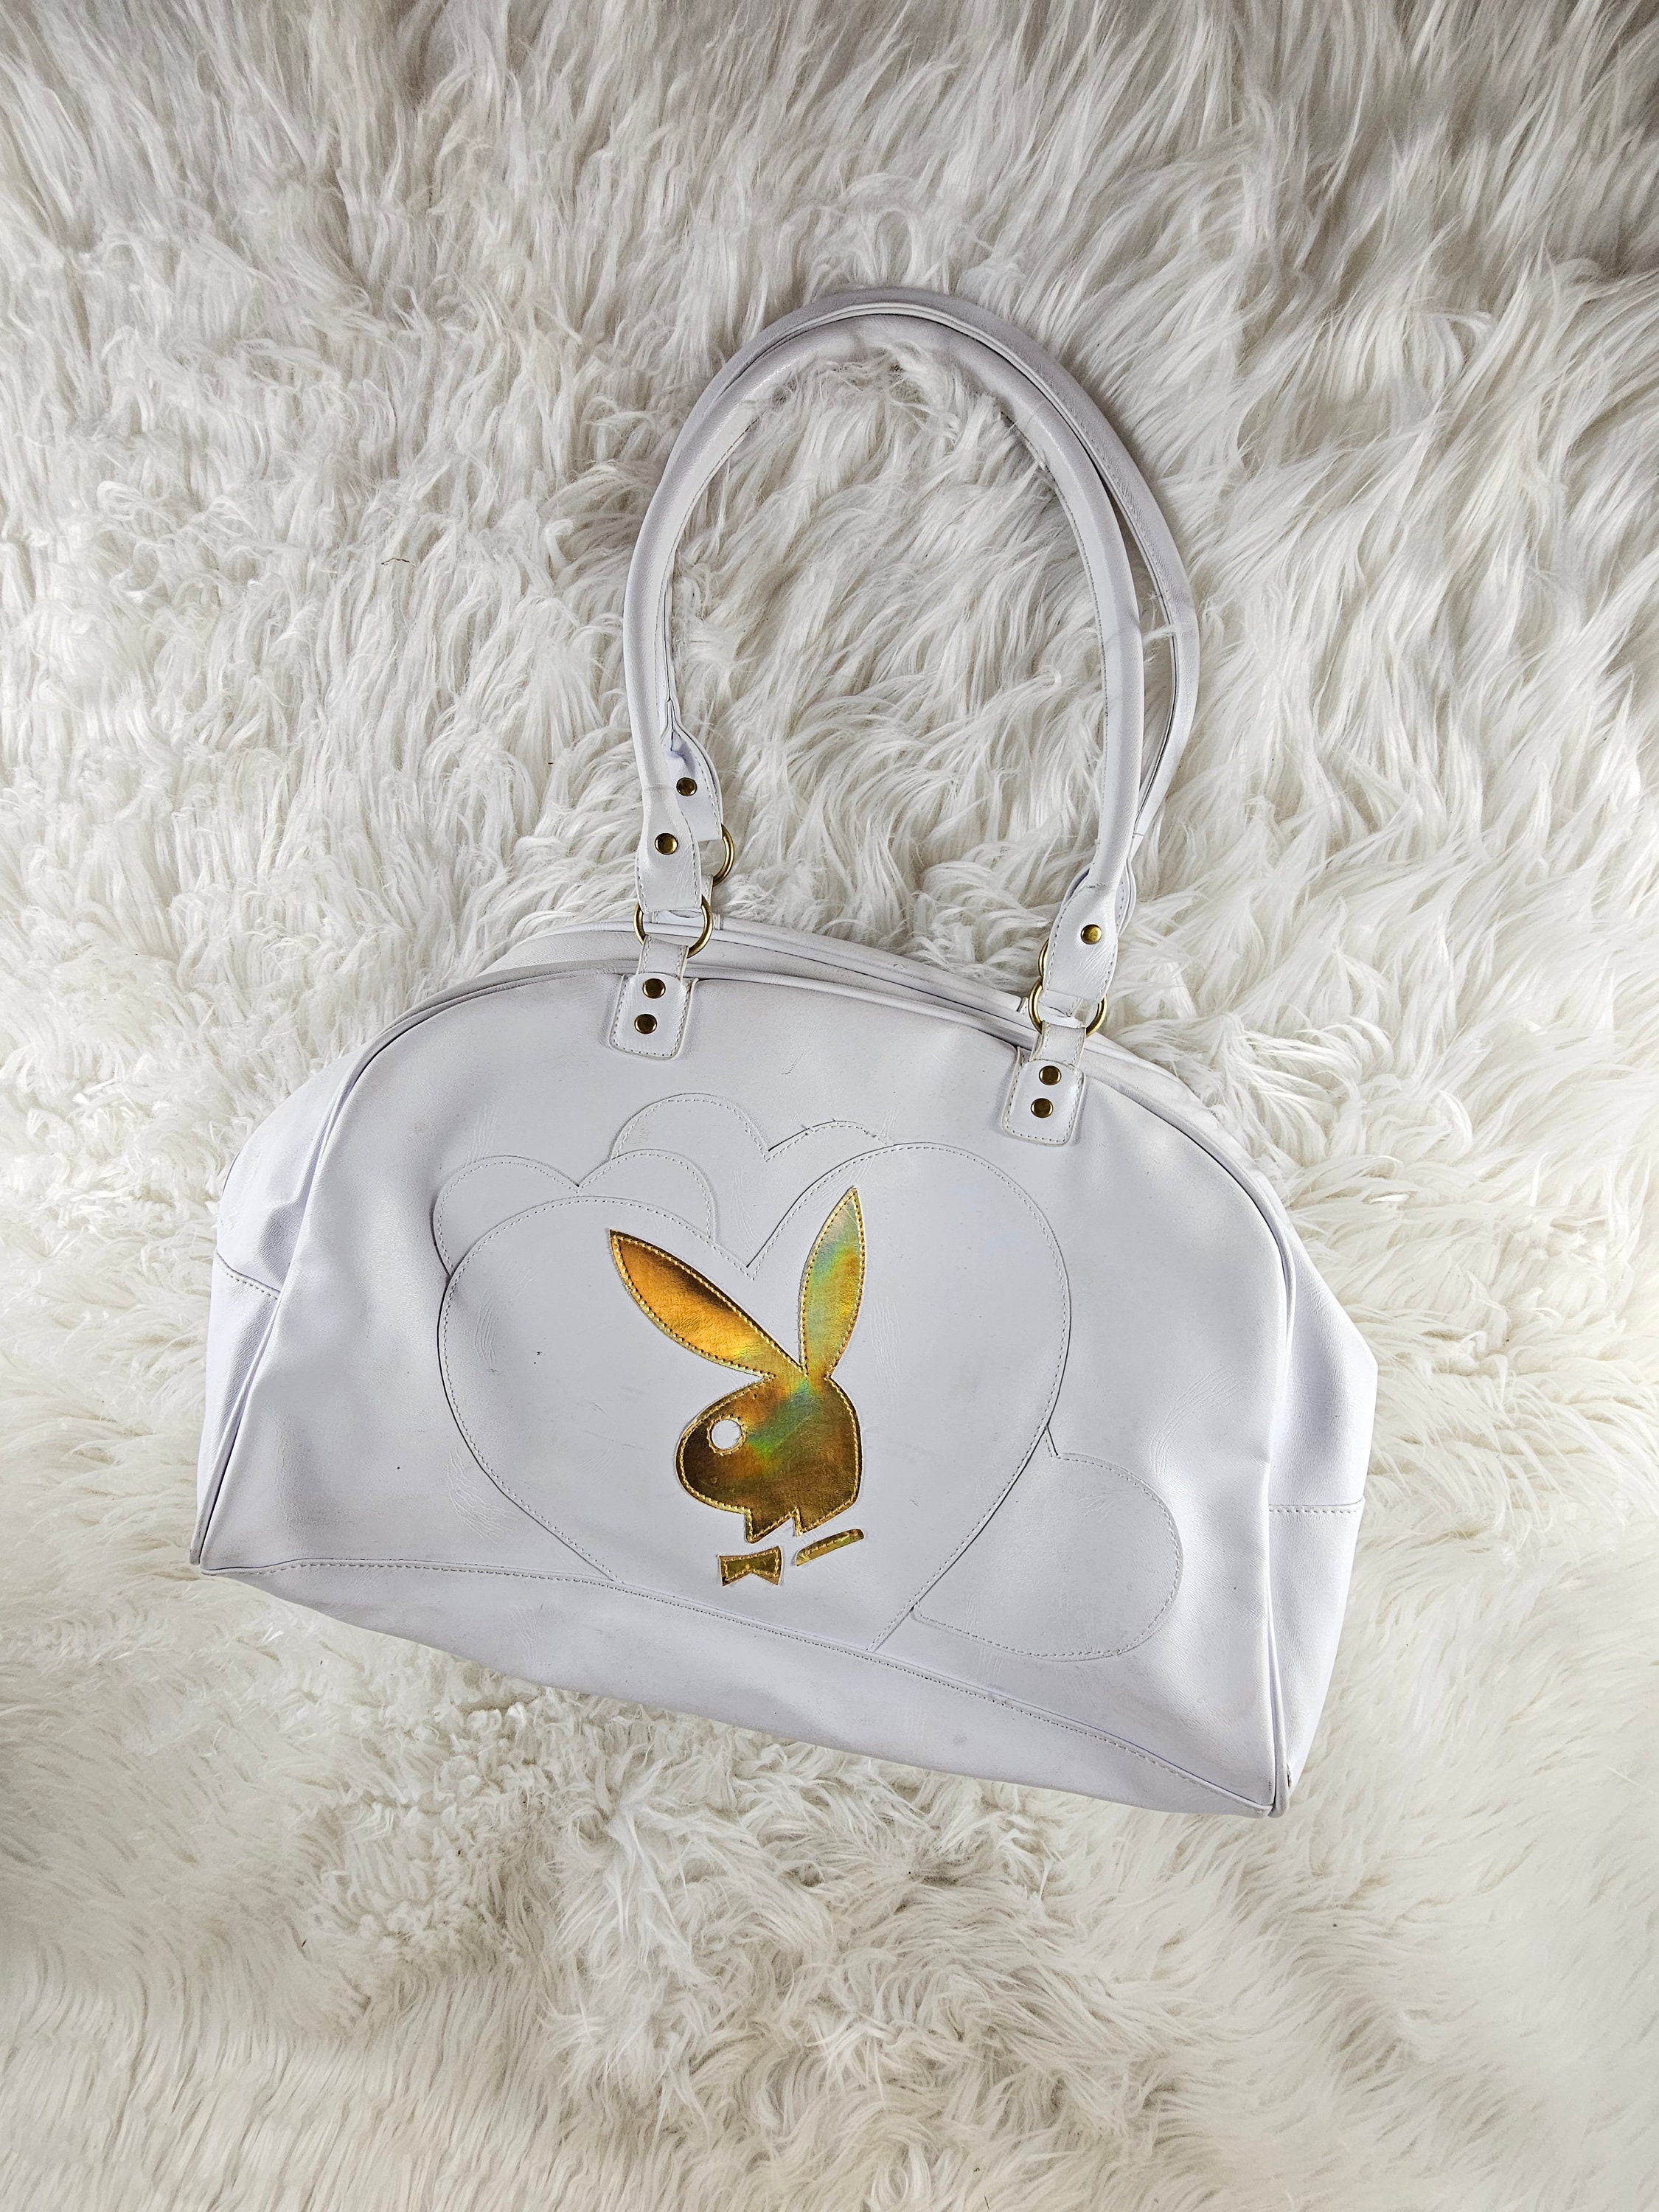 Black Playboy Bunny Mini Backpack - Spencer's